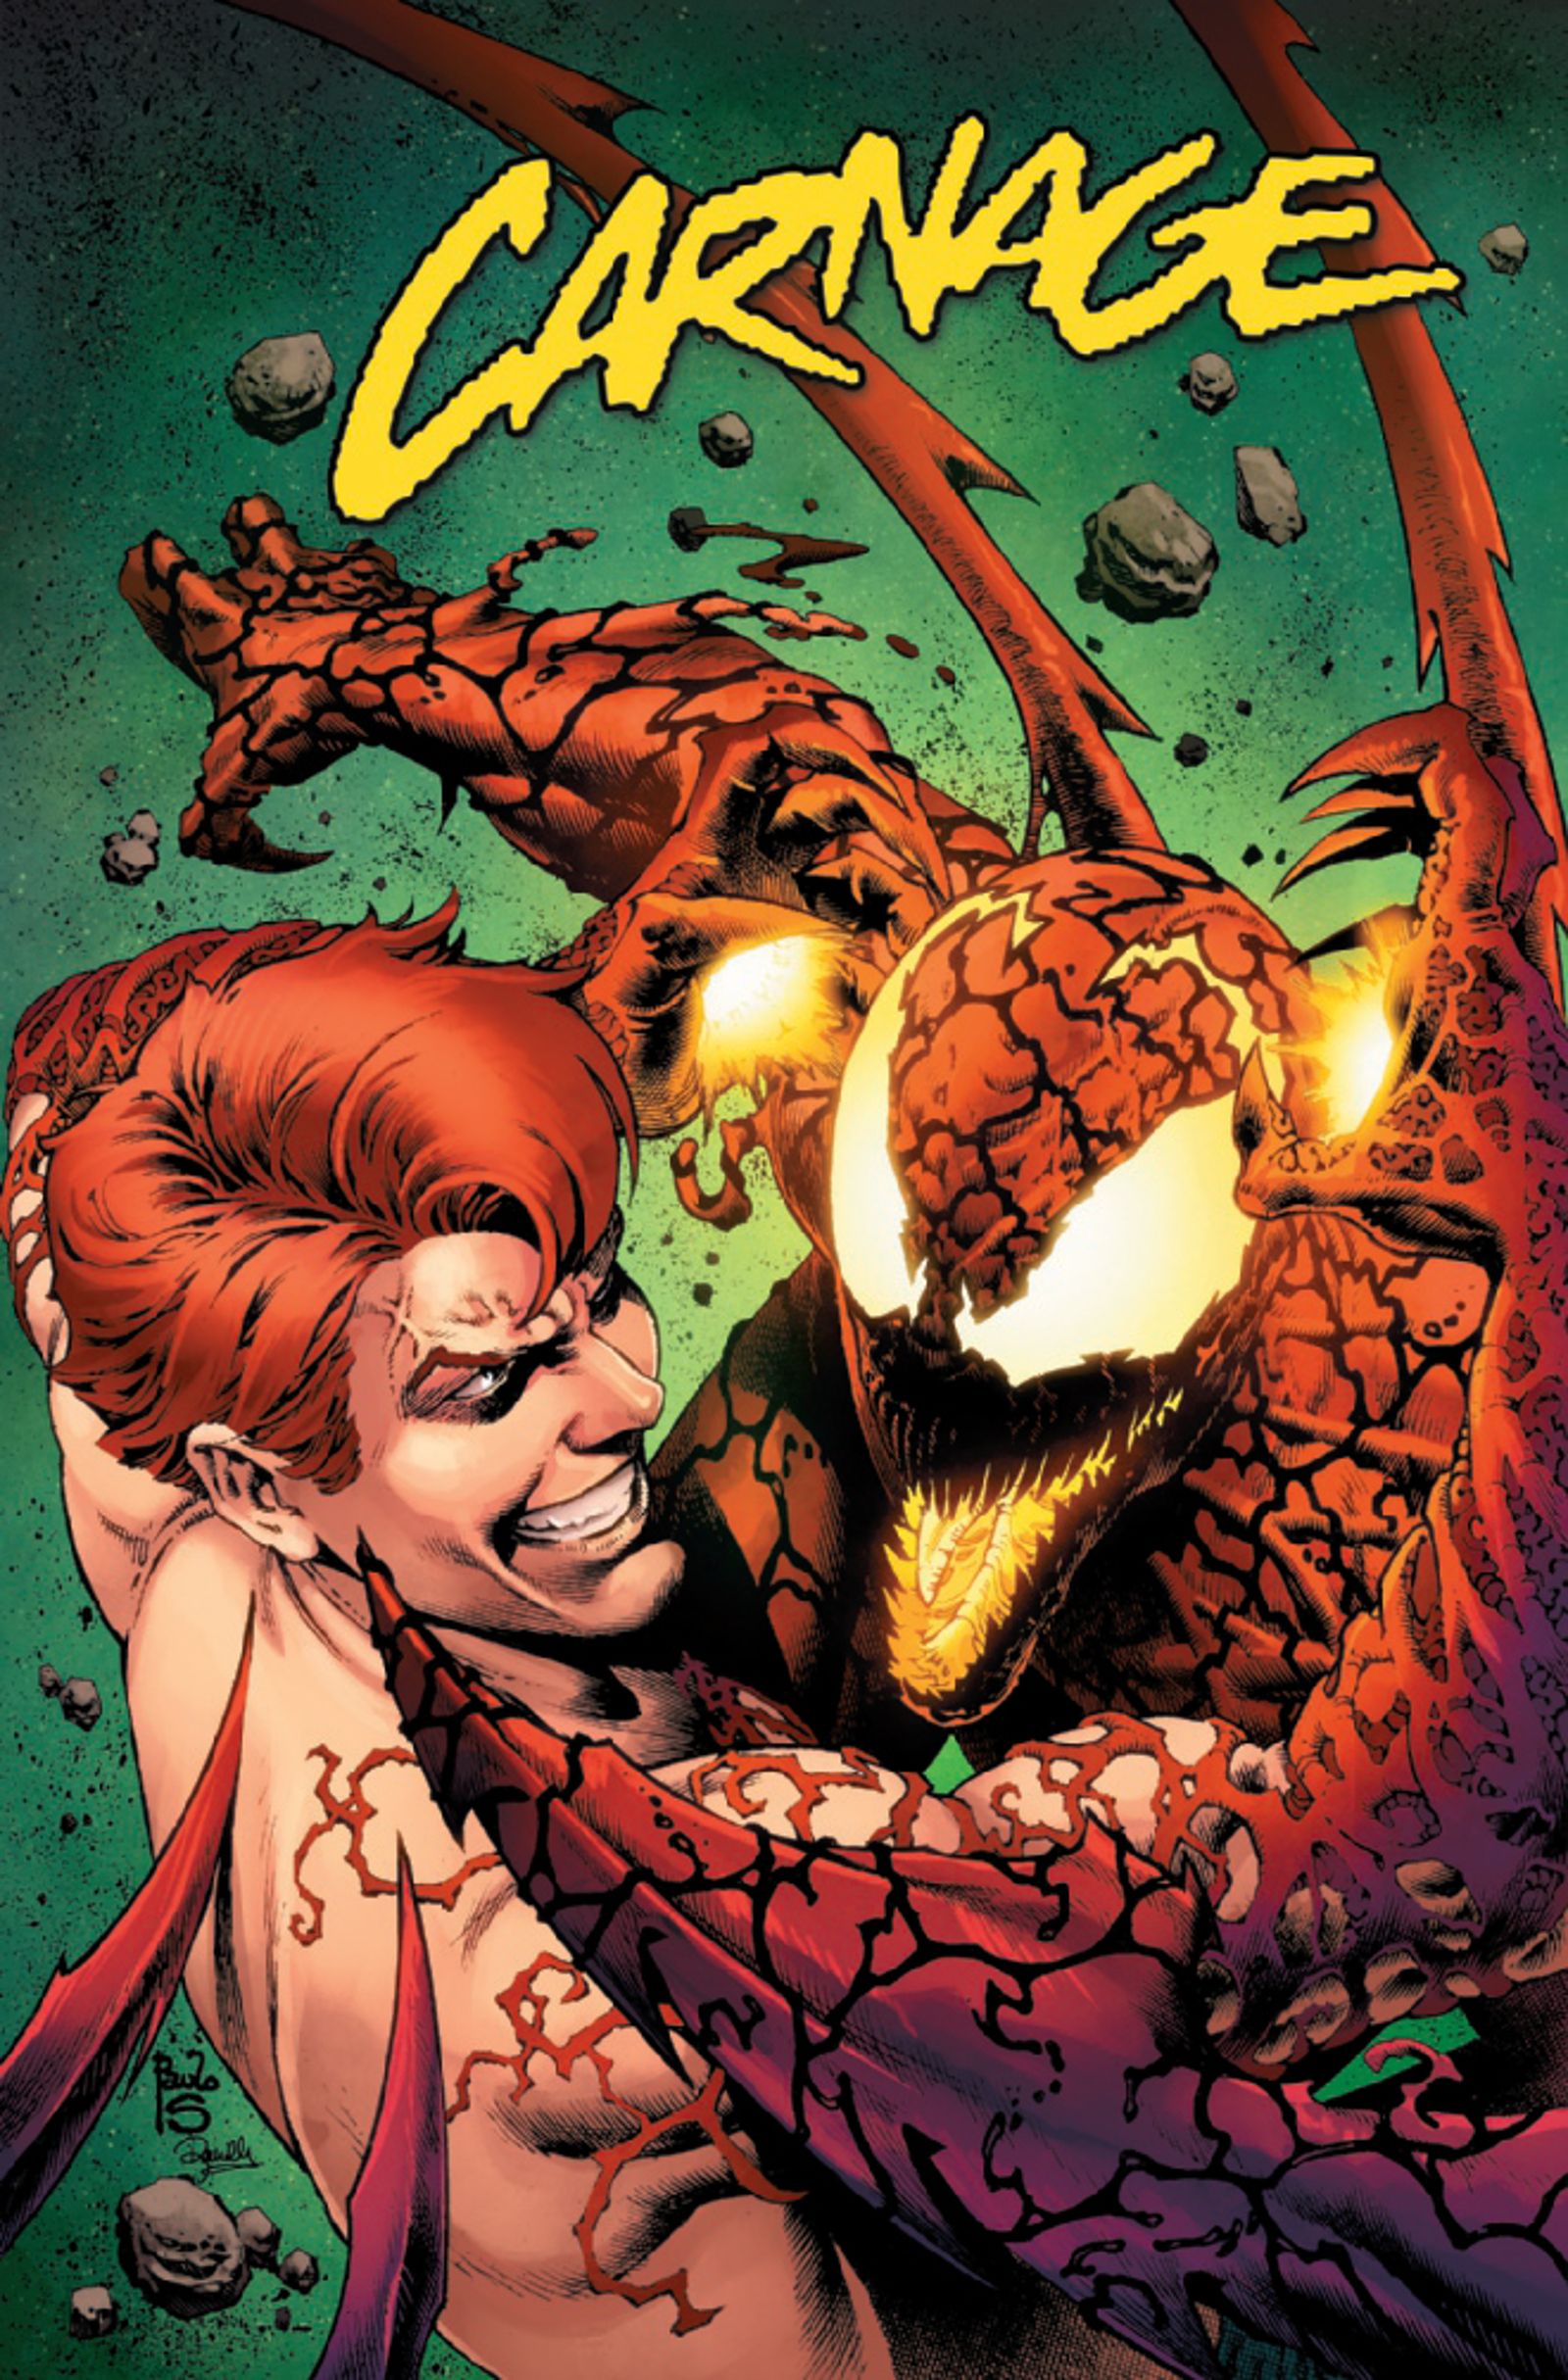 Marvel's Newest Spider-Man Comics